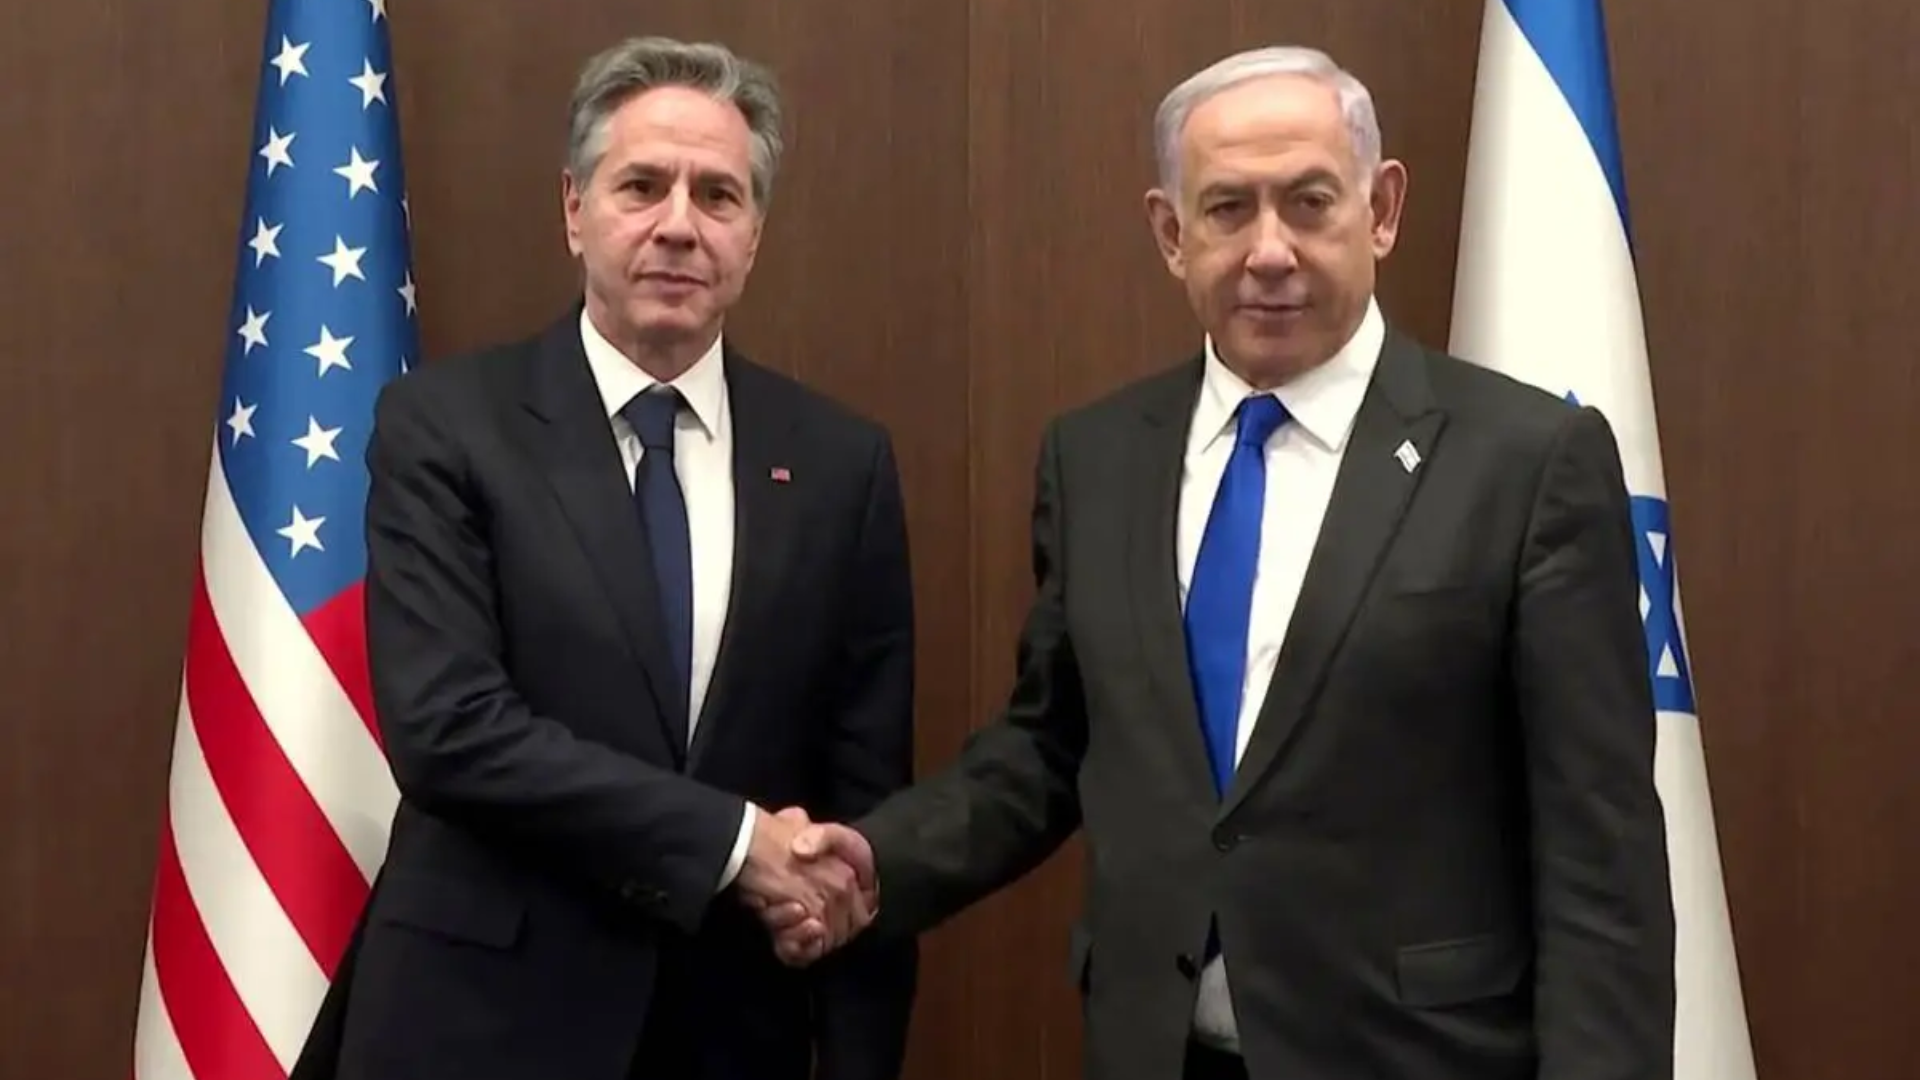 Gaza Ceasefire US Secretary Talks with Israel PM Netanyahu